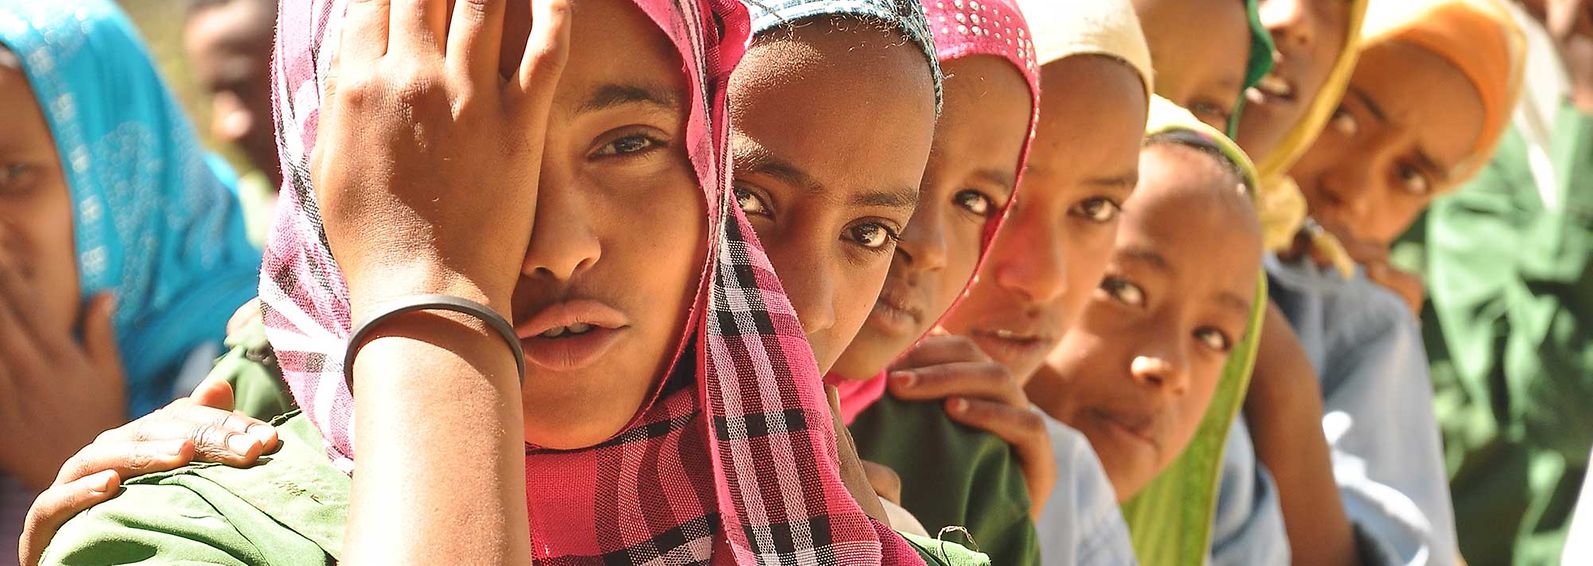 Ethiopia_Women-at-vision-screening